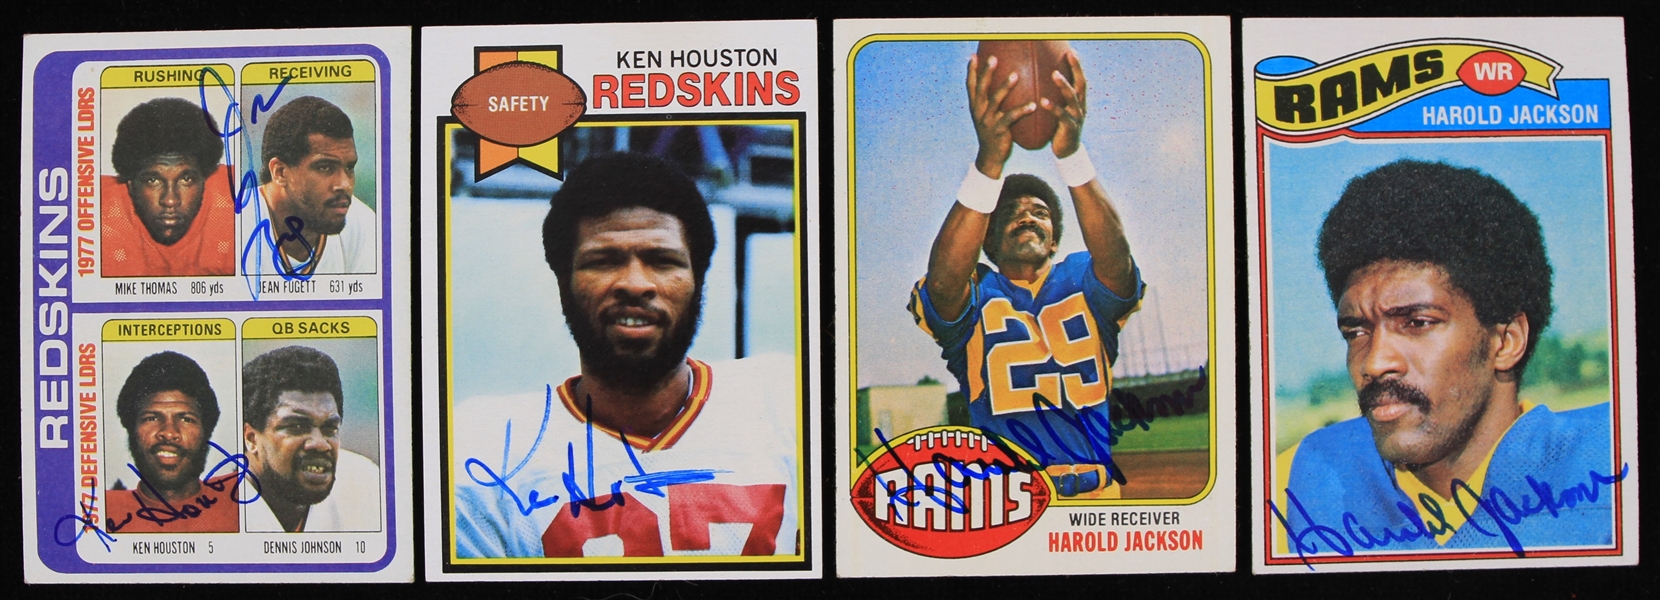 1976-79 Ken Houston Harold Jackson Signed Topps Football Trading Cards - Lot of 4 (JSA)